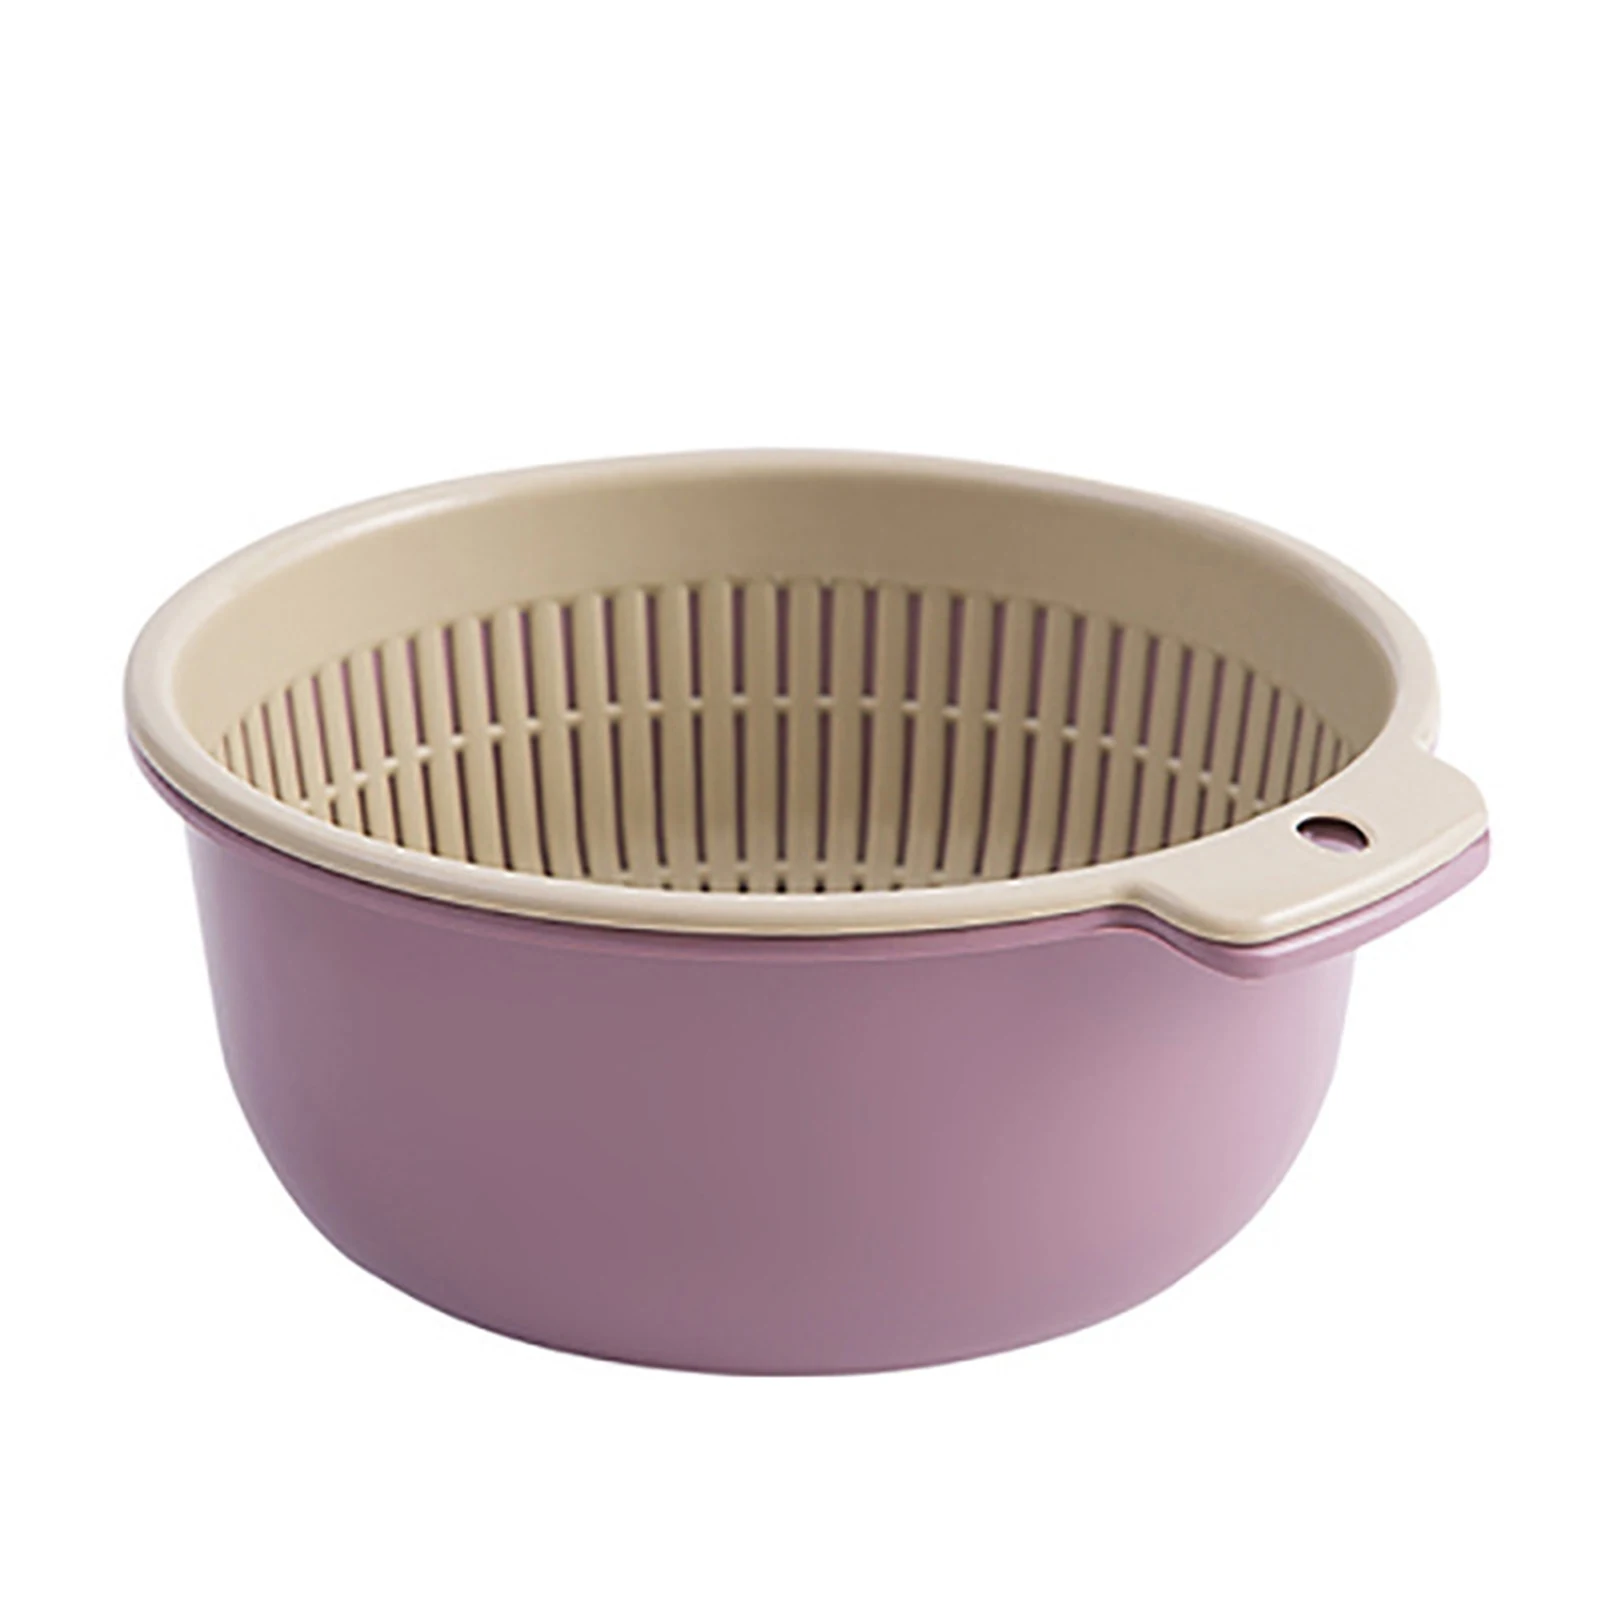 Double Layers Drain Basket Plastic Kitchen Strainer Colander Bowl Fruits & Vegetables Washing Strainer JA55